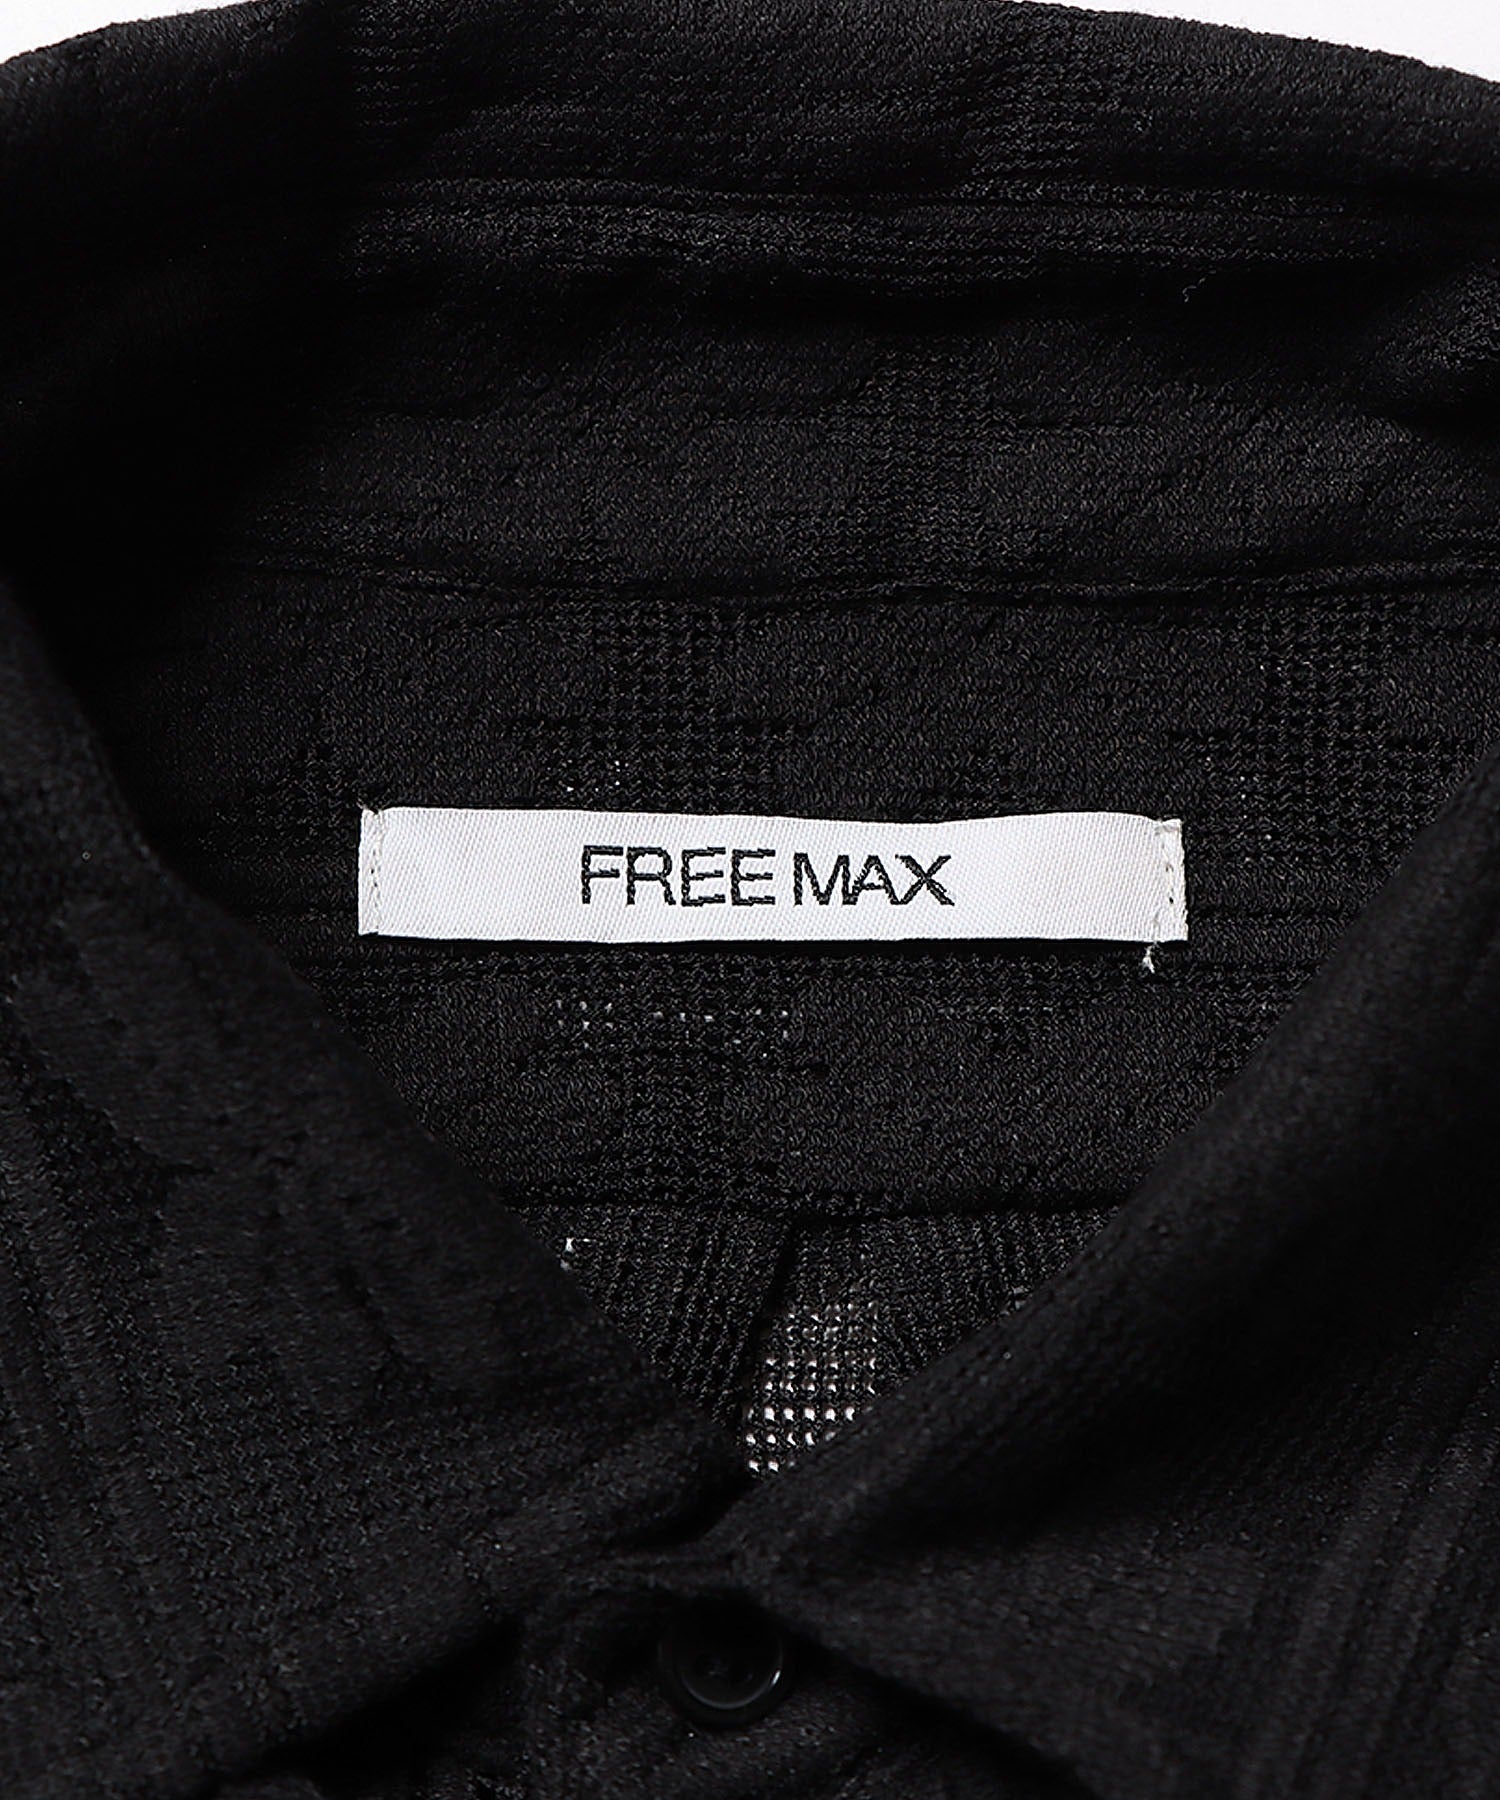 FREE MAX×Hyoma Flower Lace Shirt